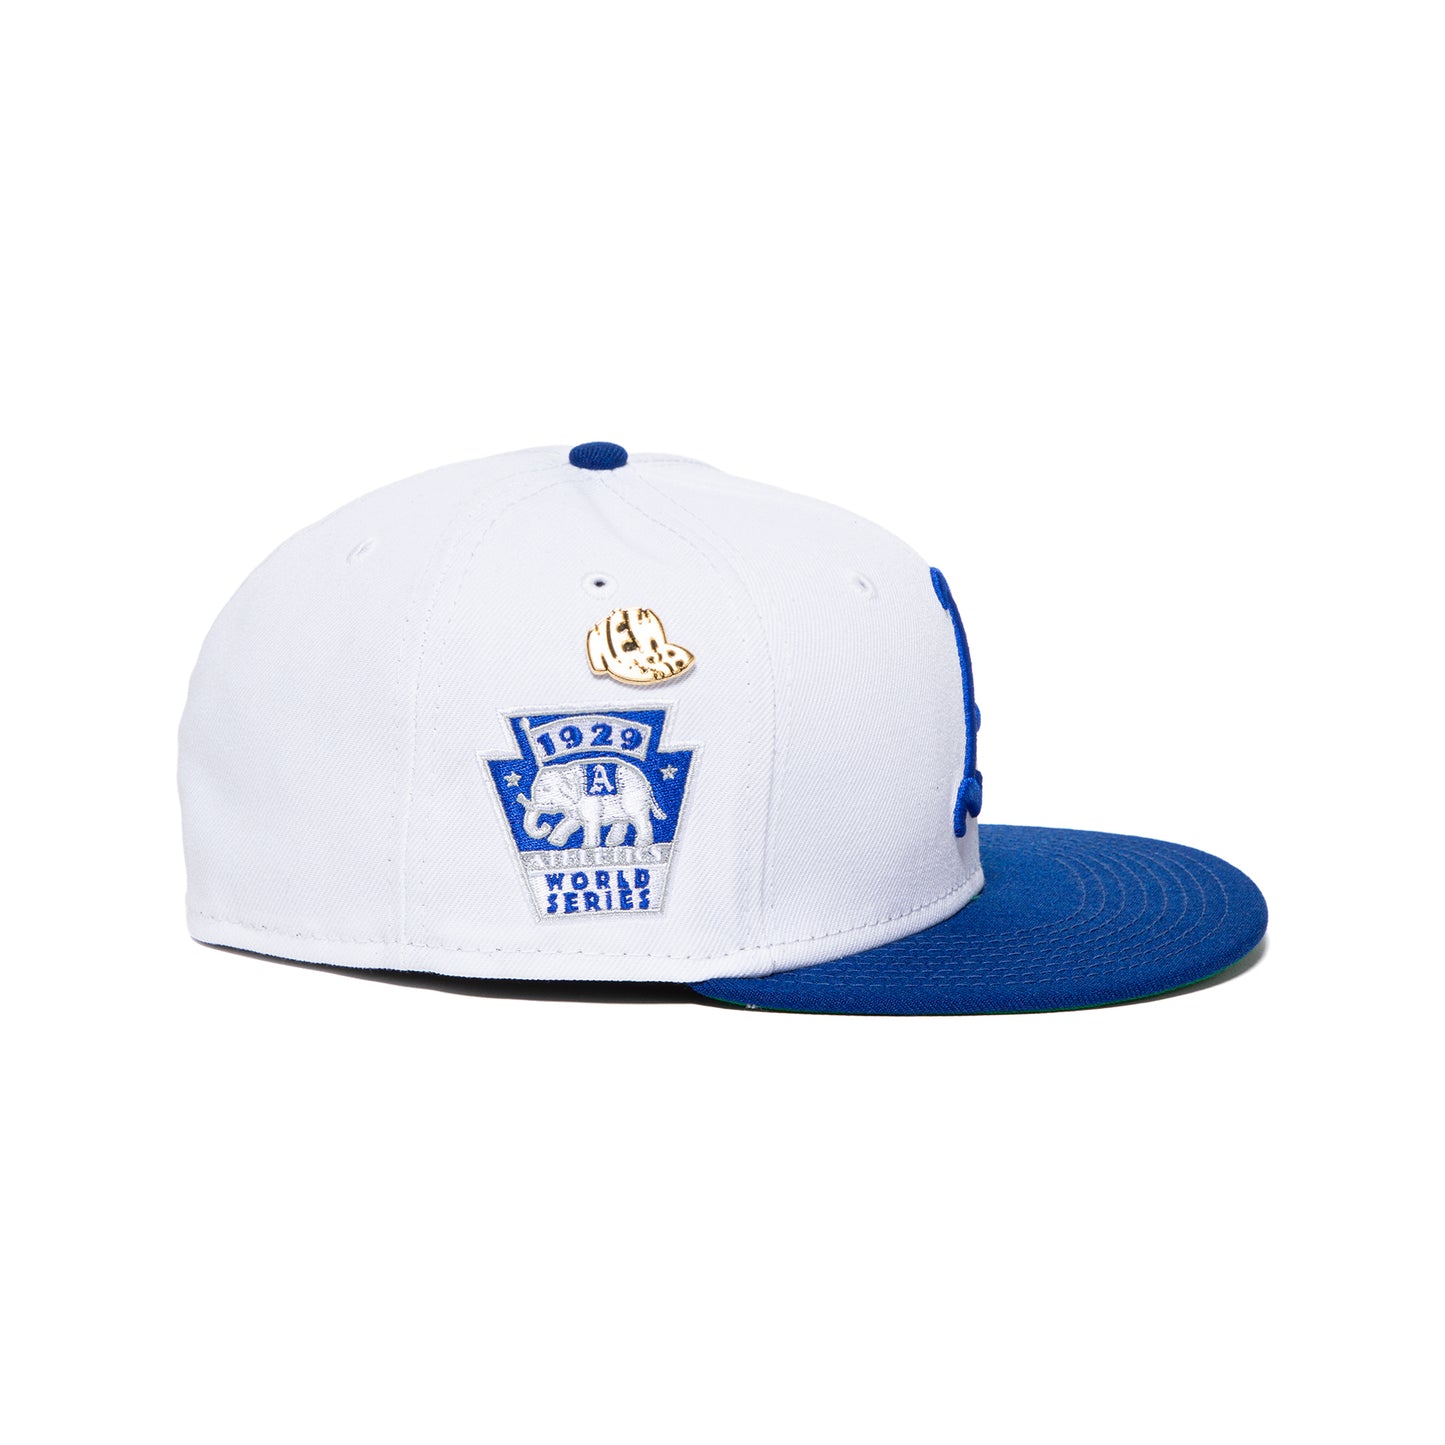 New Era Philadelphia Athletics 1929 Logo History 59FIFTY Fitted Hat 7 1/8 / White